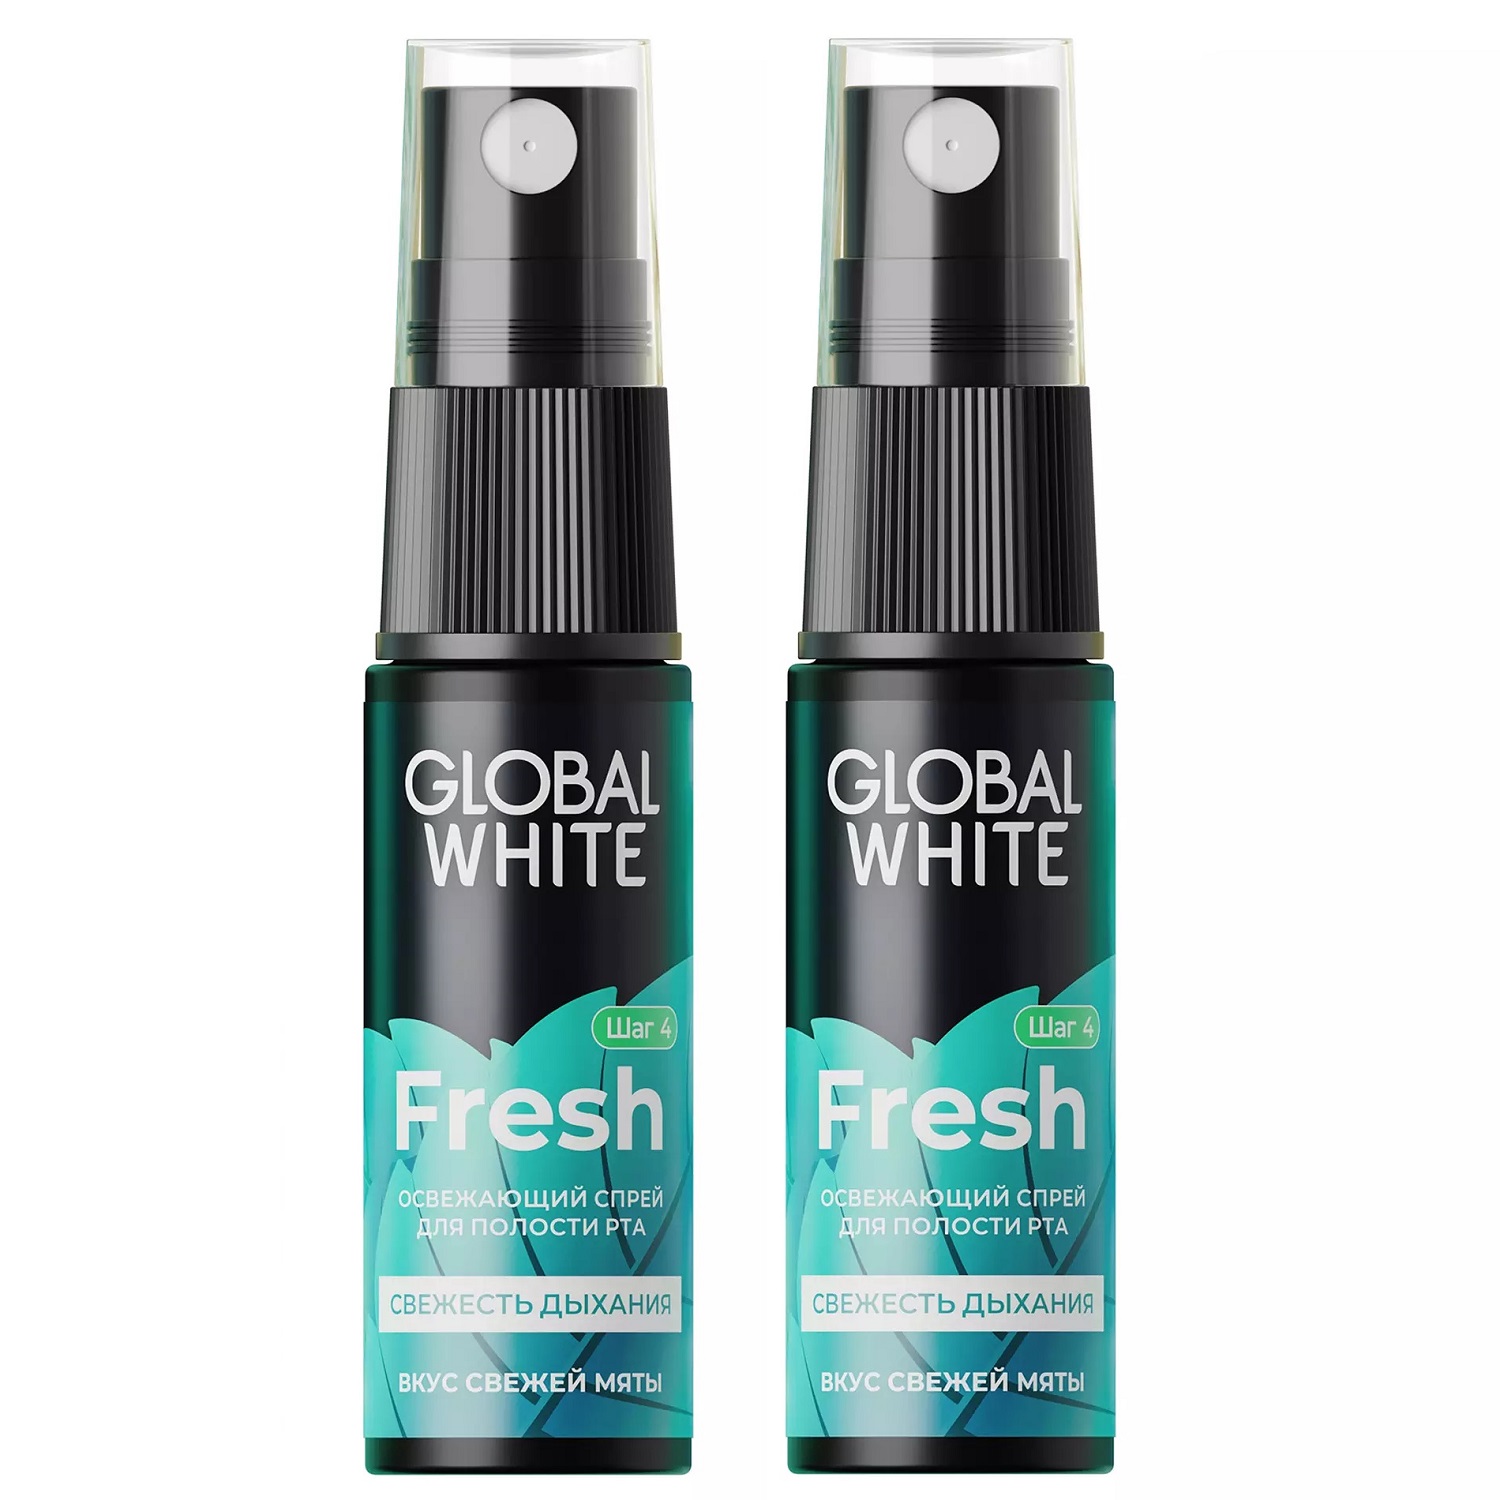 Global White Набор: освежающий спрей для полости рта «Свежее дыхание», 2 х 15 мл (Global White, Поддержание эффекта отбеливания) освежающий спрей для полости рта мята